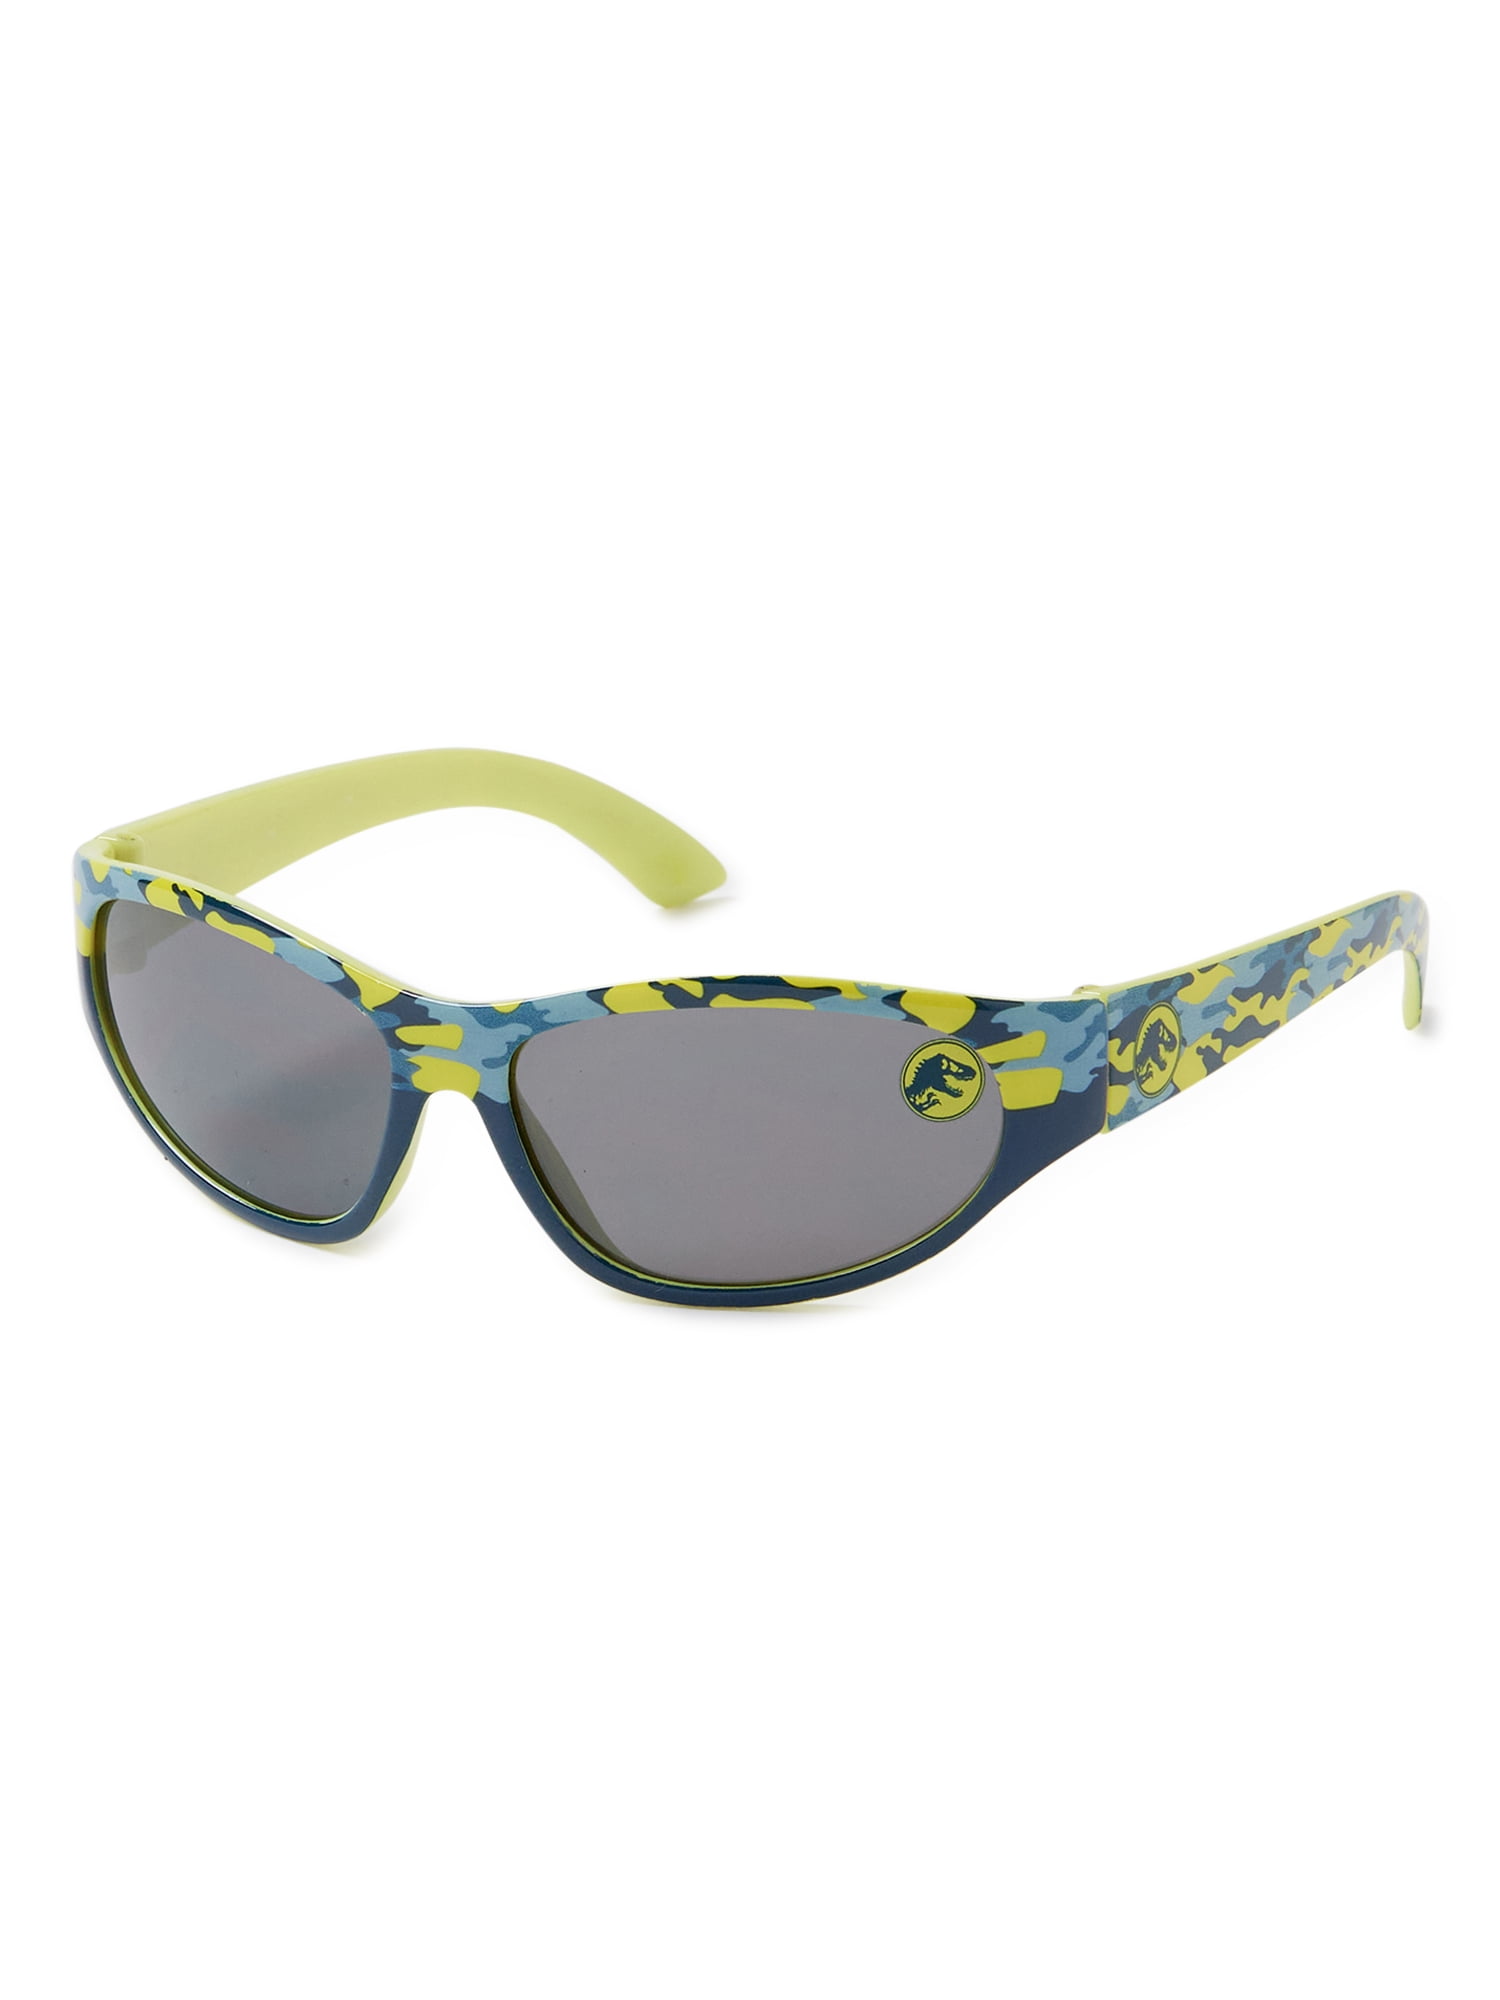 Details about   Sun Staches Dinosaur Sunglasses 100% UV Protection Impact Resistant Lenses 